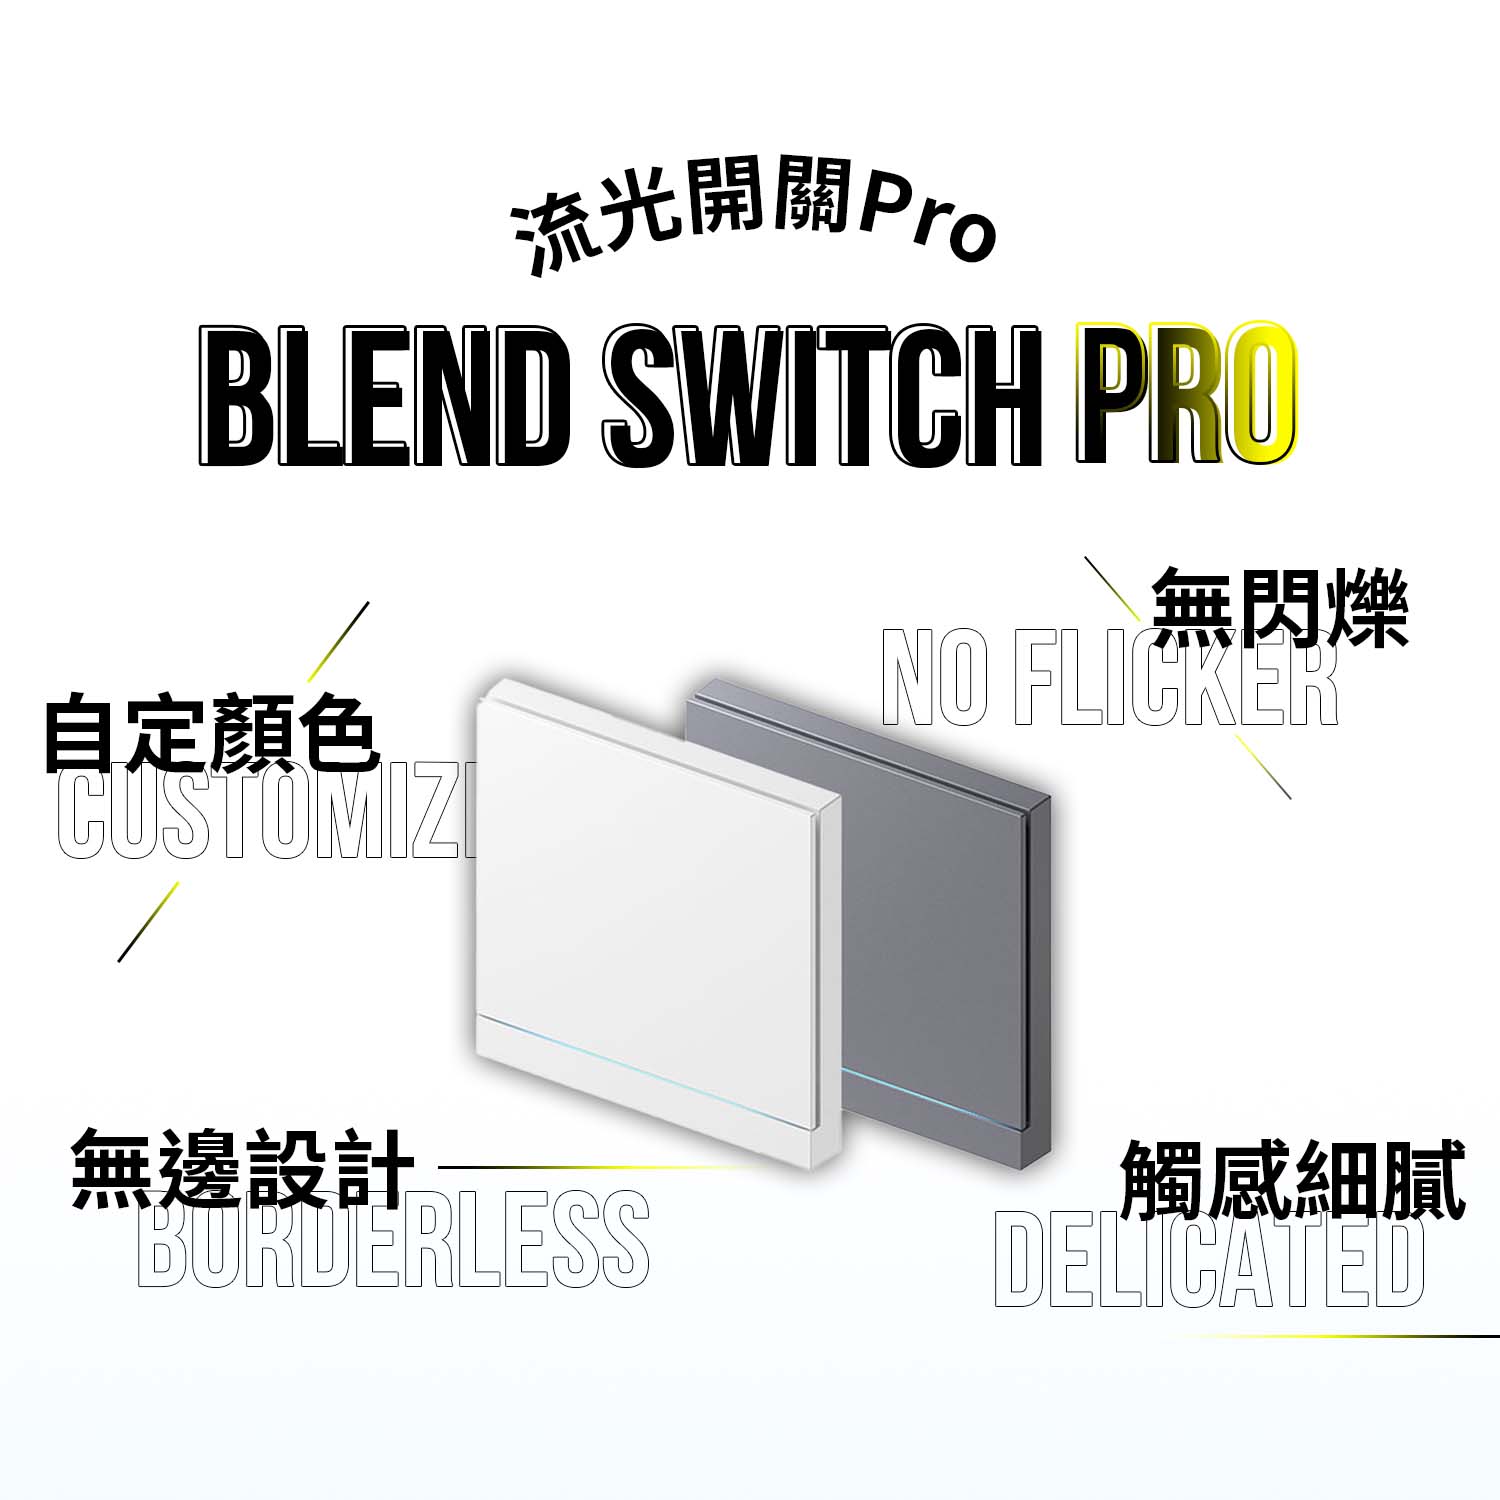 blend switch pro intro